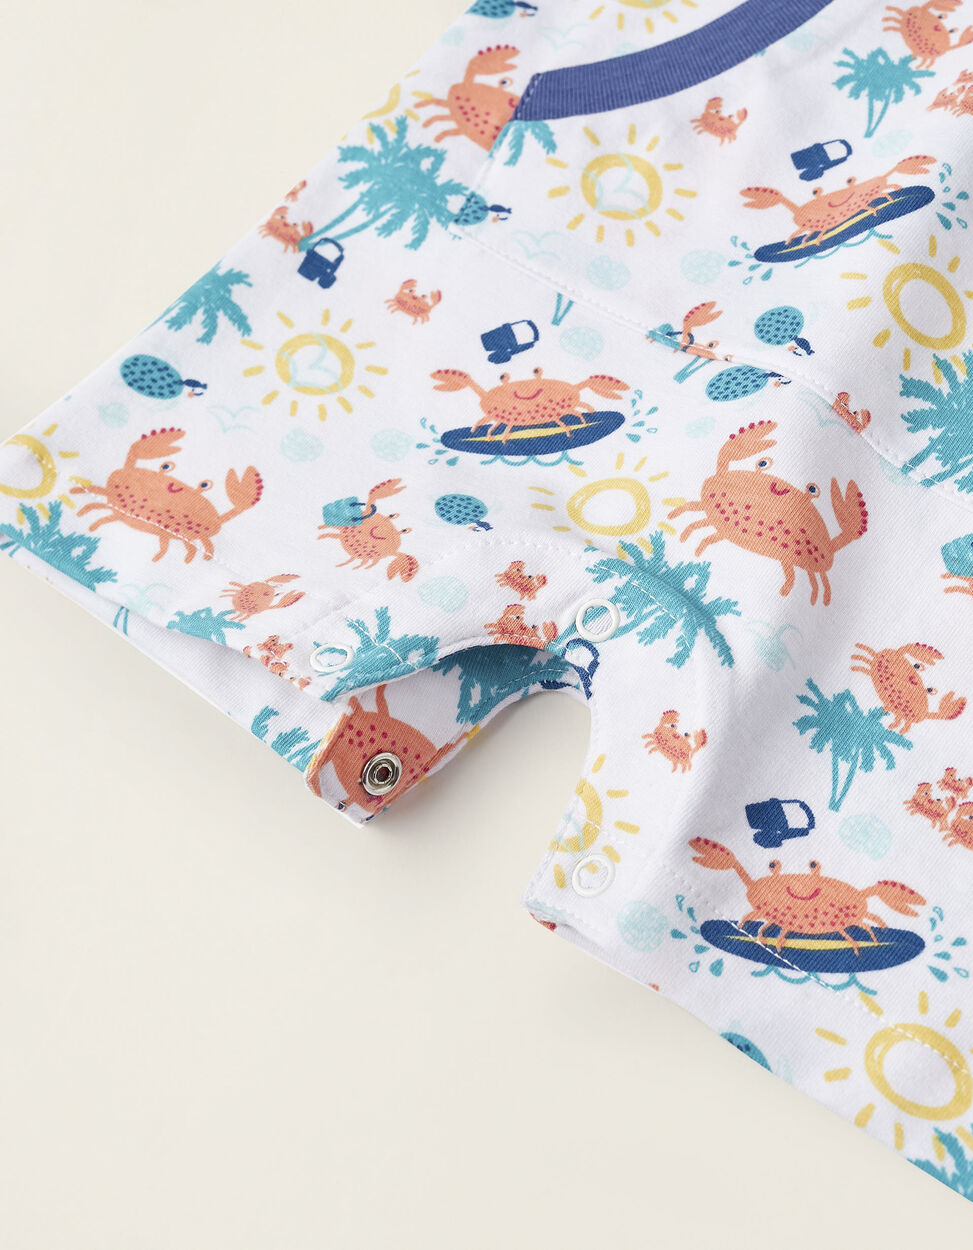 Buy Online Hat + Jumpsuit for Newborns Boys 'Crabs', White/Blue